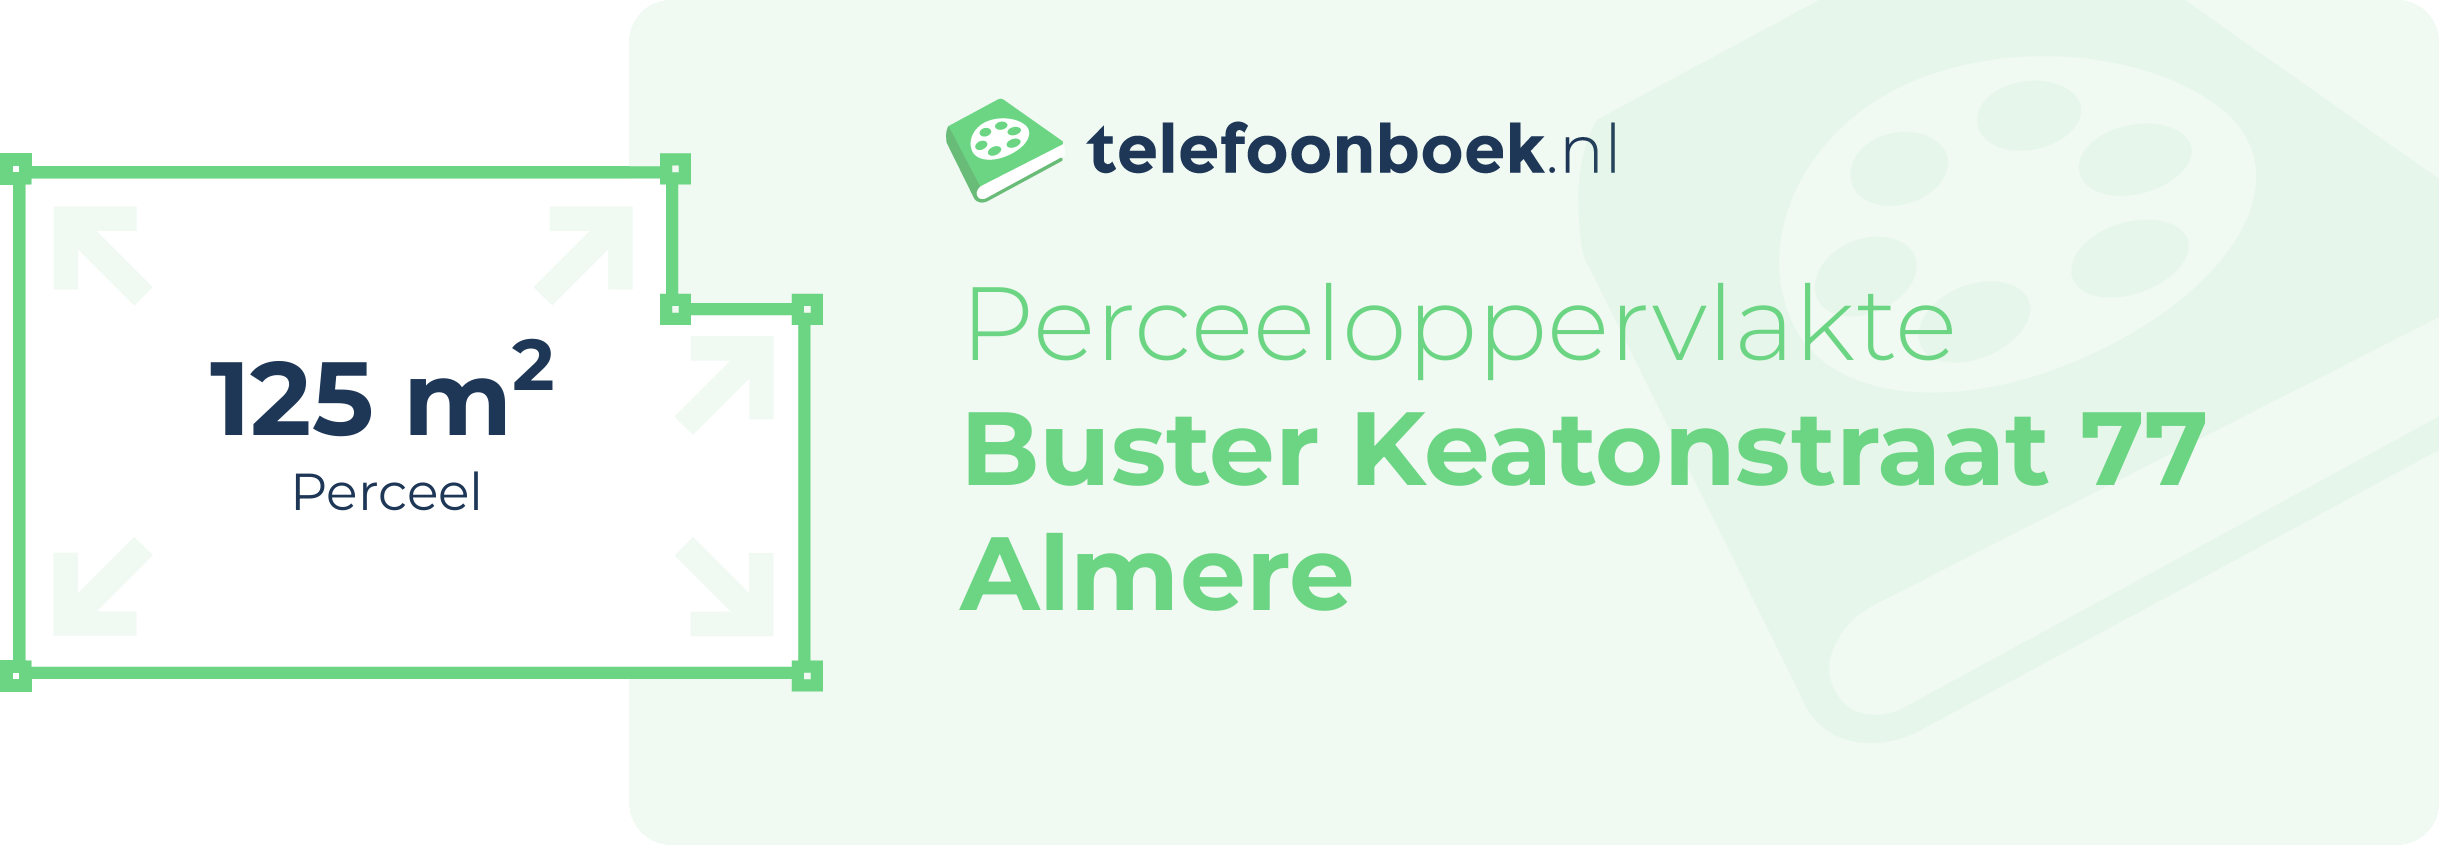 Perceeloppervlakte Buster Keatonstraat 77 Almere